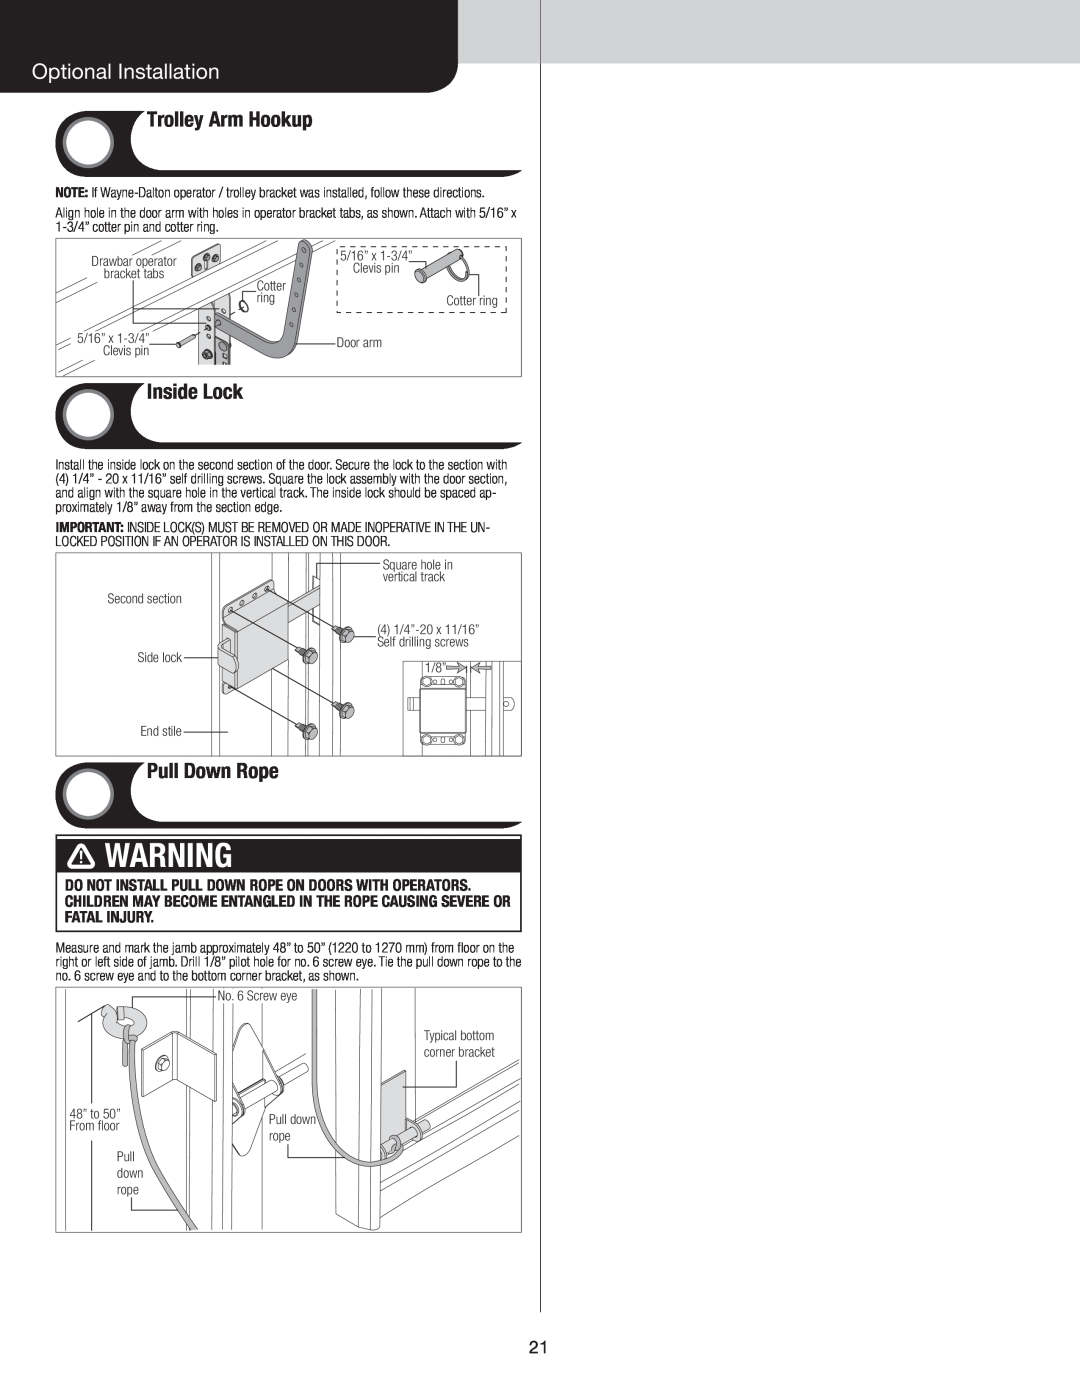 Wayne-Dalton 8300/8500 Optional Installation, Trolley Arm Hookup, Inside Lock, Pull Down Rope, WarningARNING 